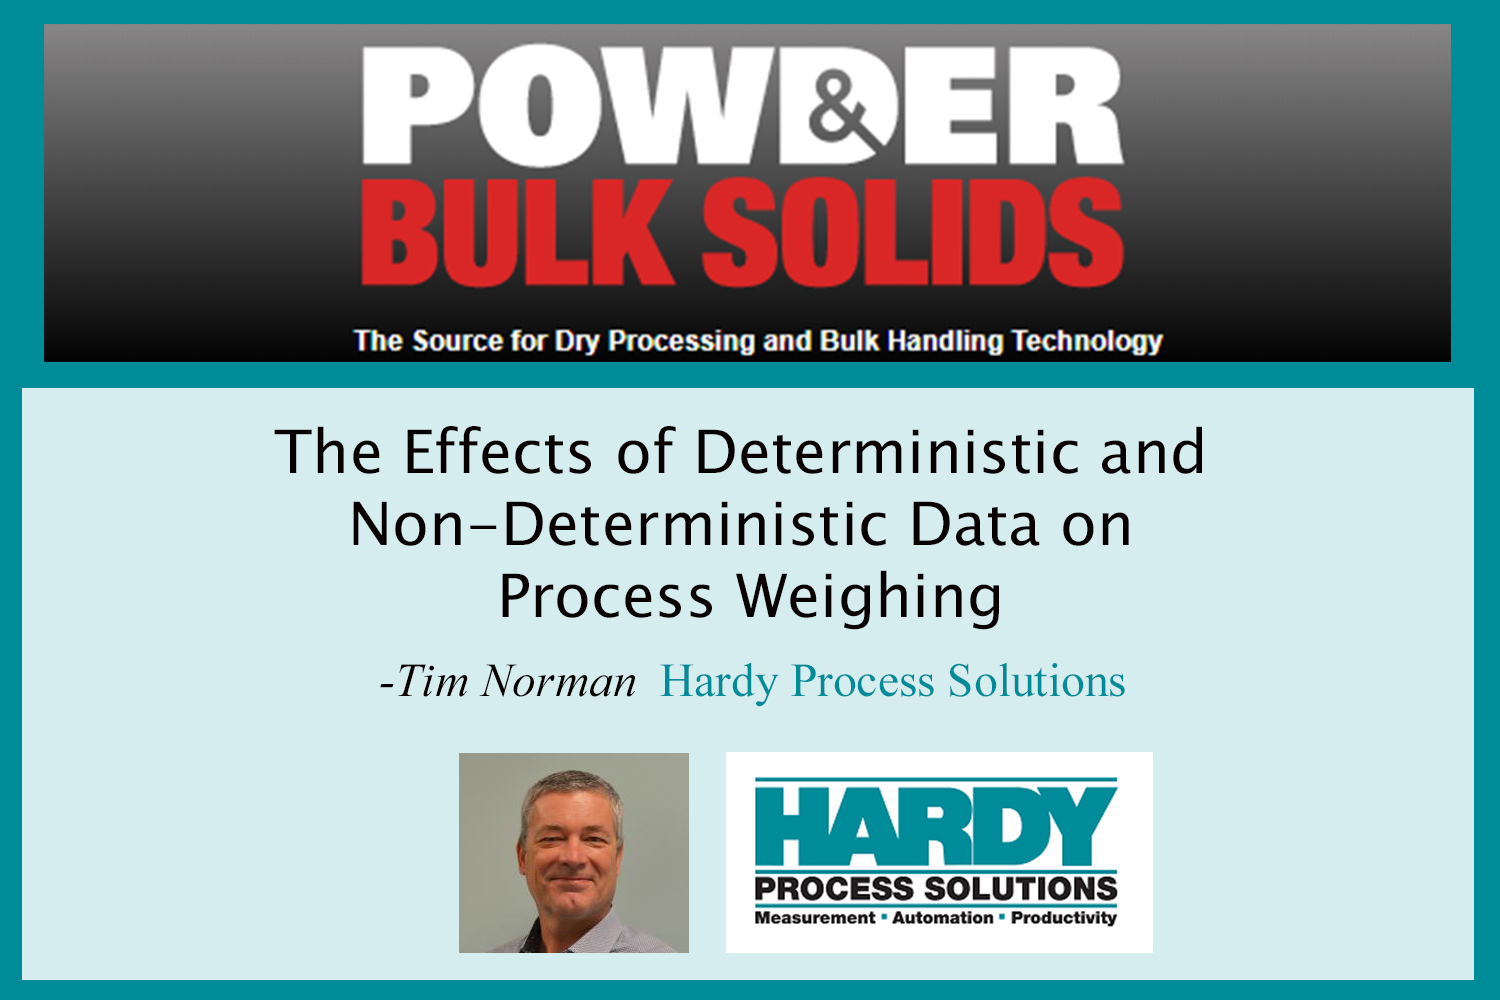 Hardy Solutions Editorial in Powder/Bulk Solids